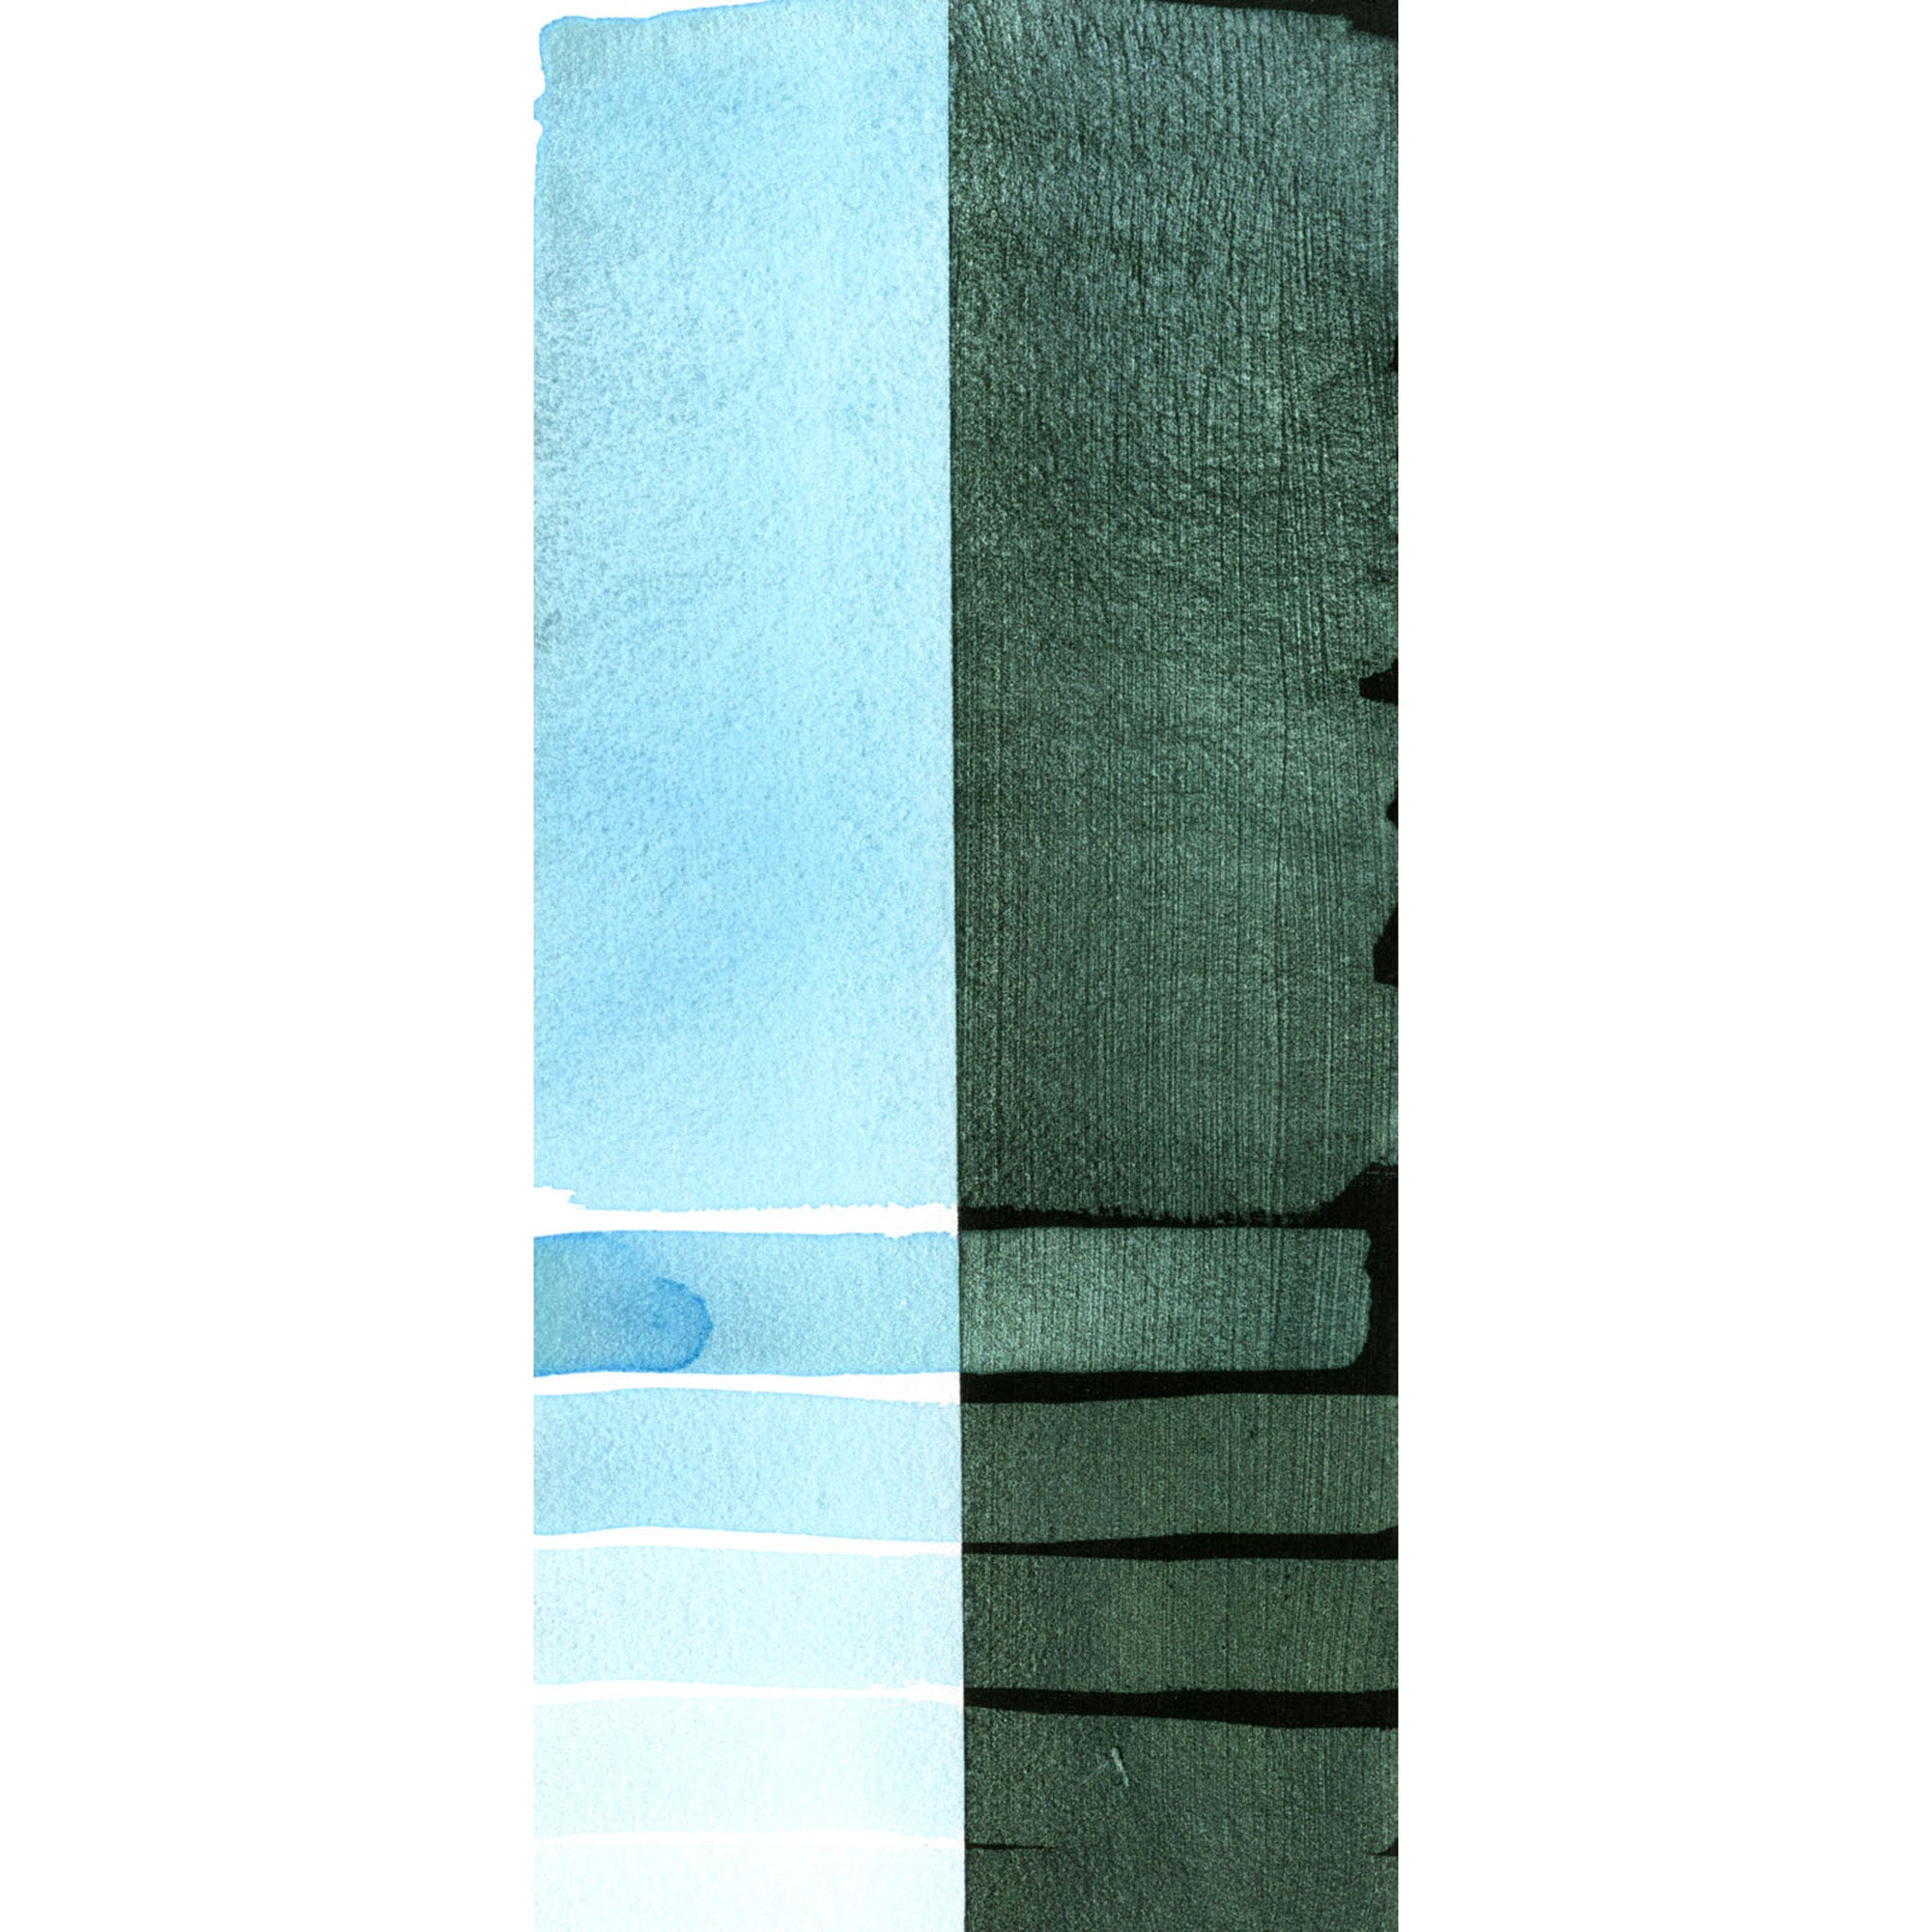 Daniel Smith Watercolor 15ml Duochrome Turquoise 1